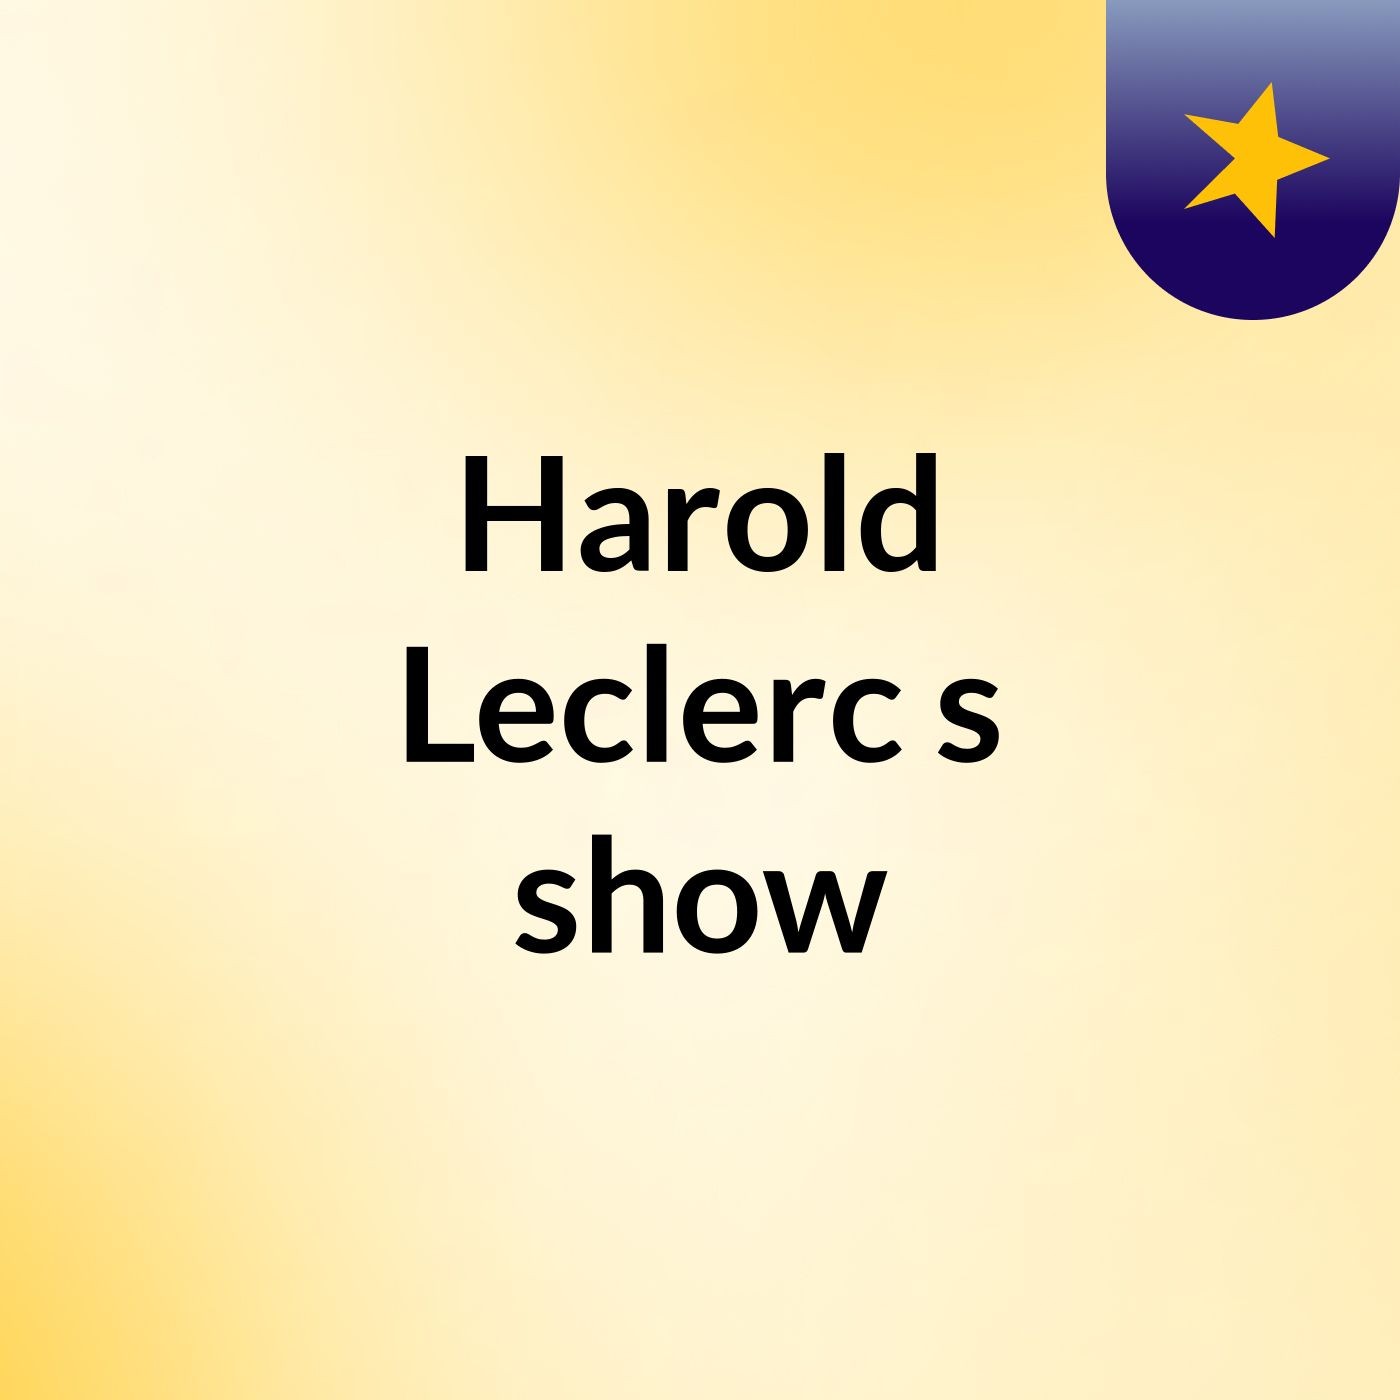 Harold Leclerc's show